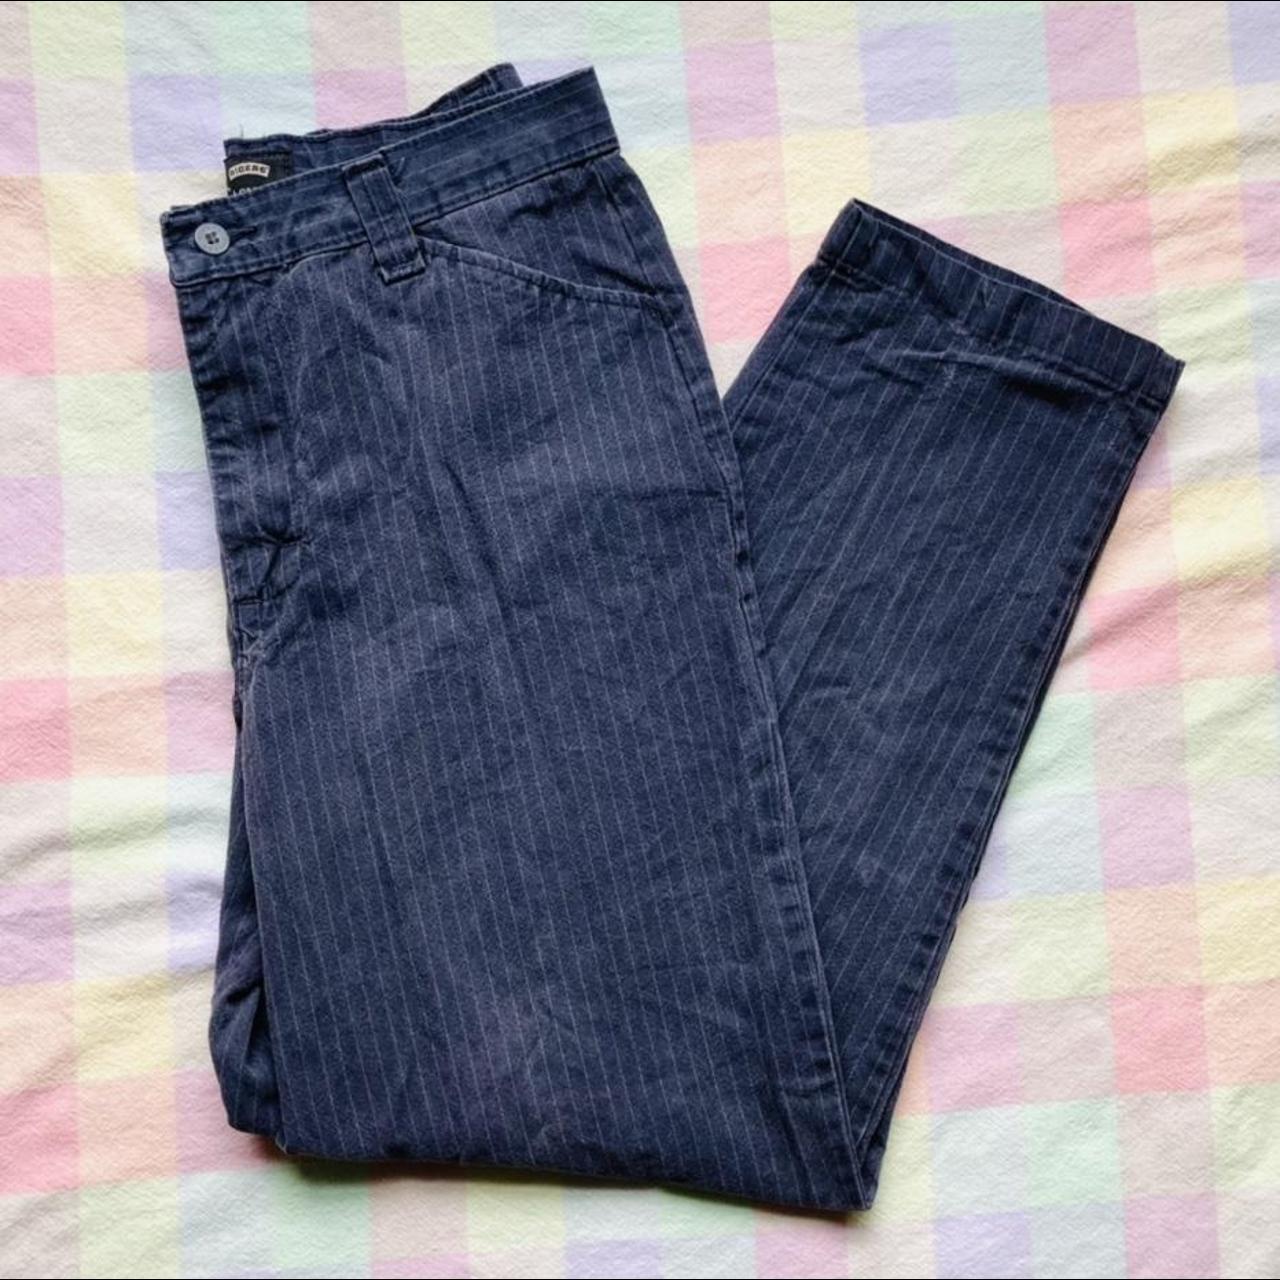 vintage black pinstripe jeans ️ ️ ️ ️ ️ 90s vintage... - Depop